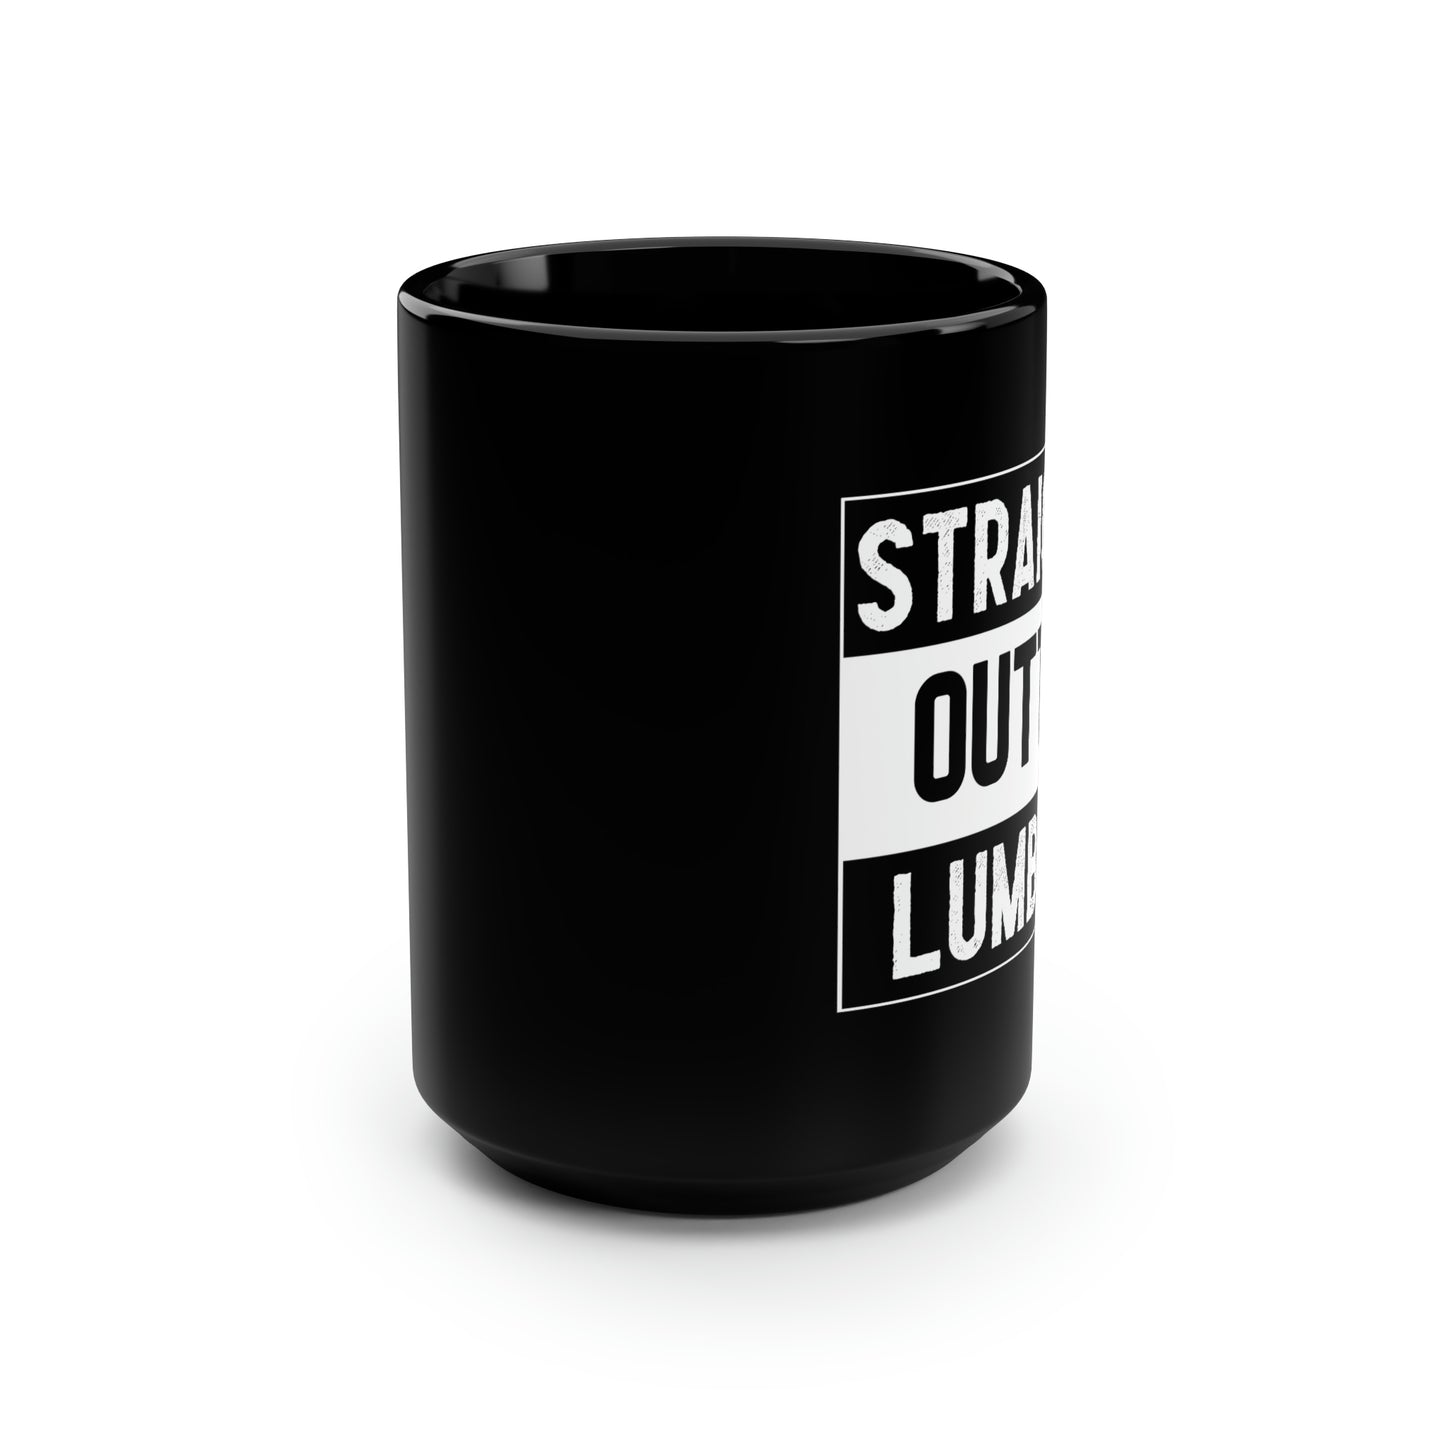 Straight Outta Lumber Black Mug, 15oz